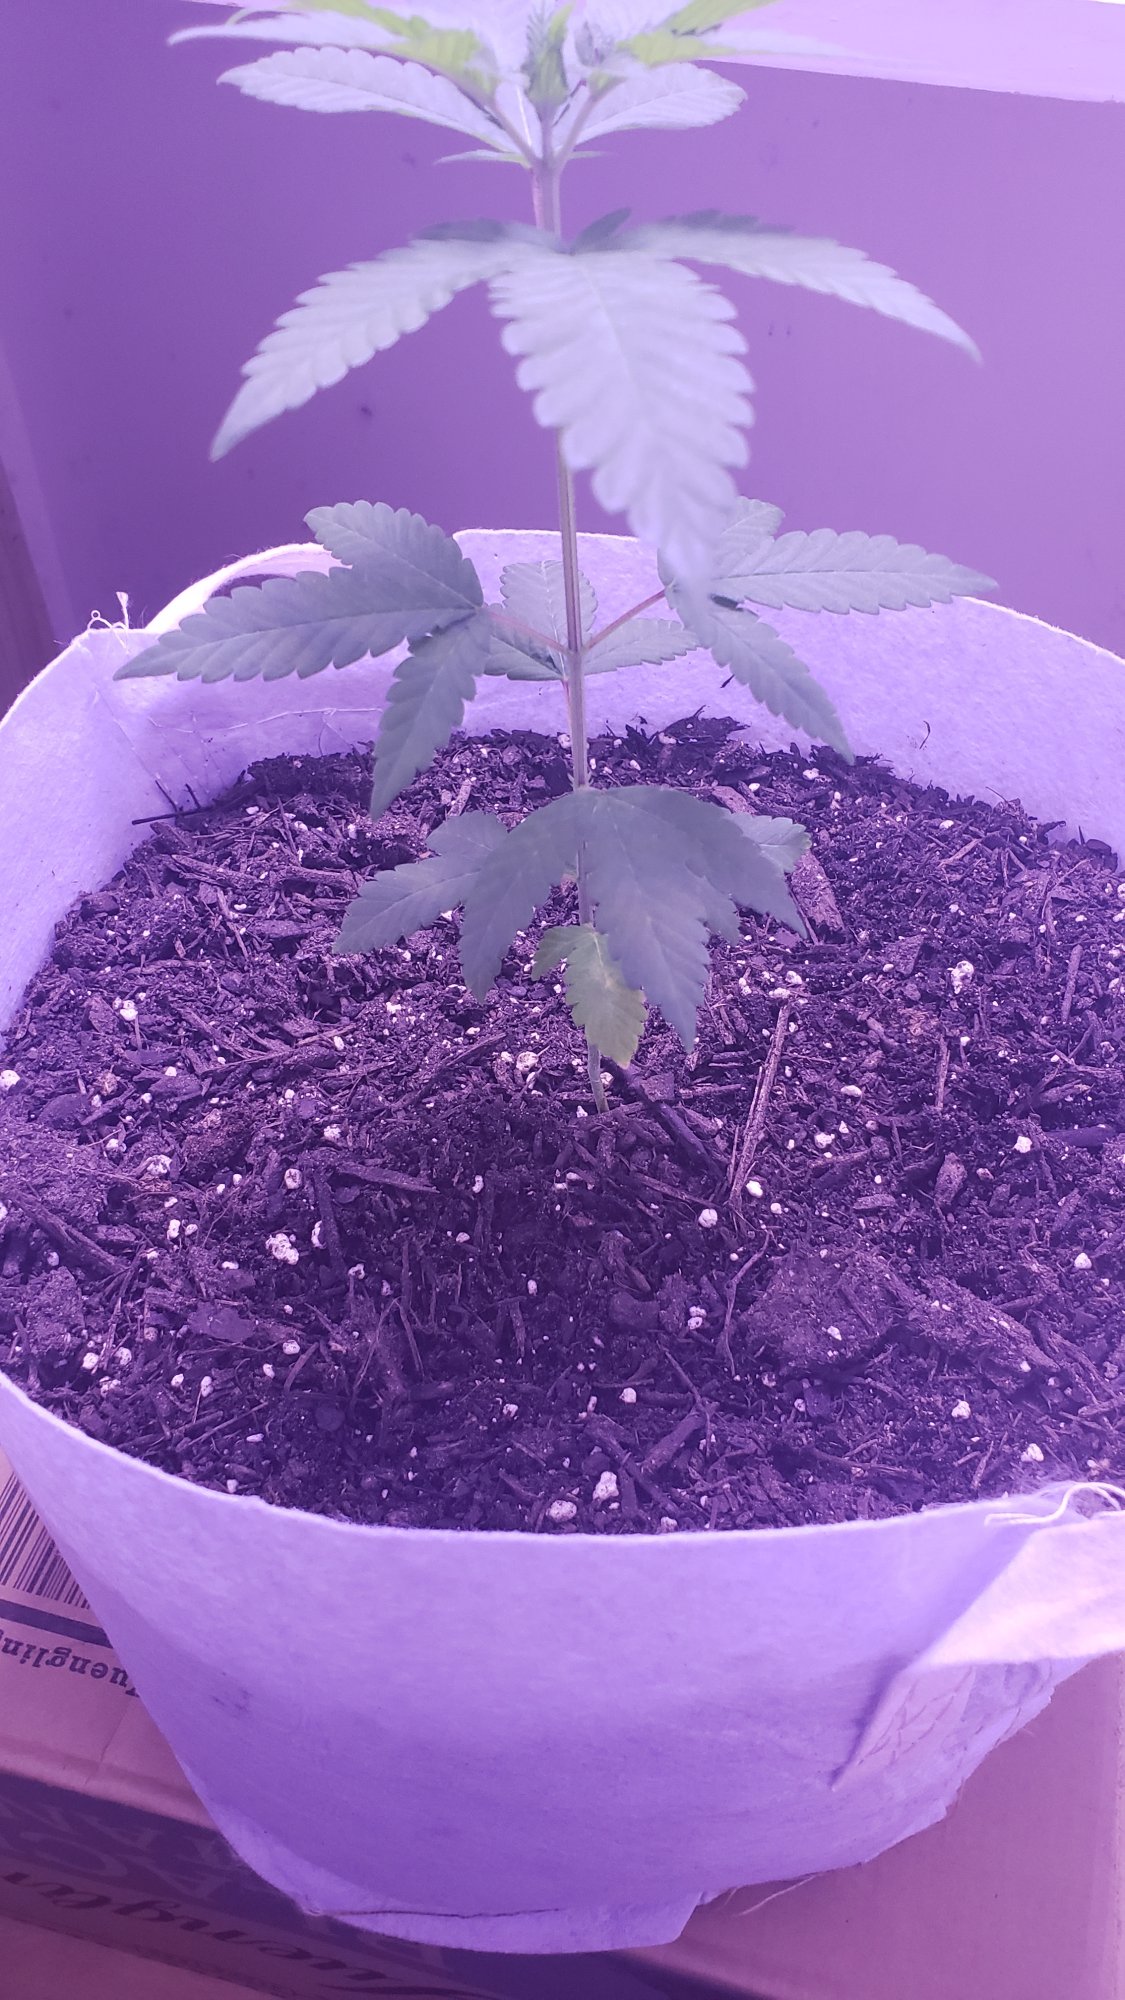 1st time grow 2